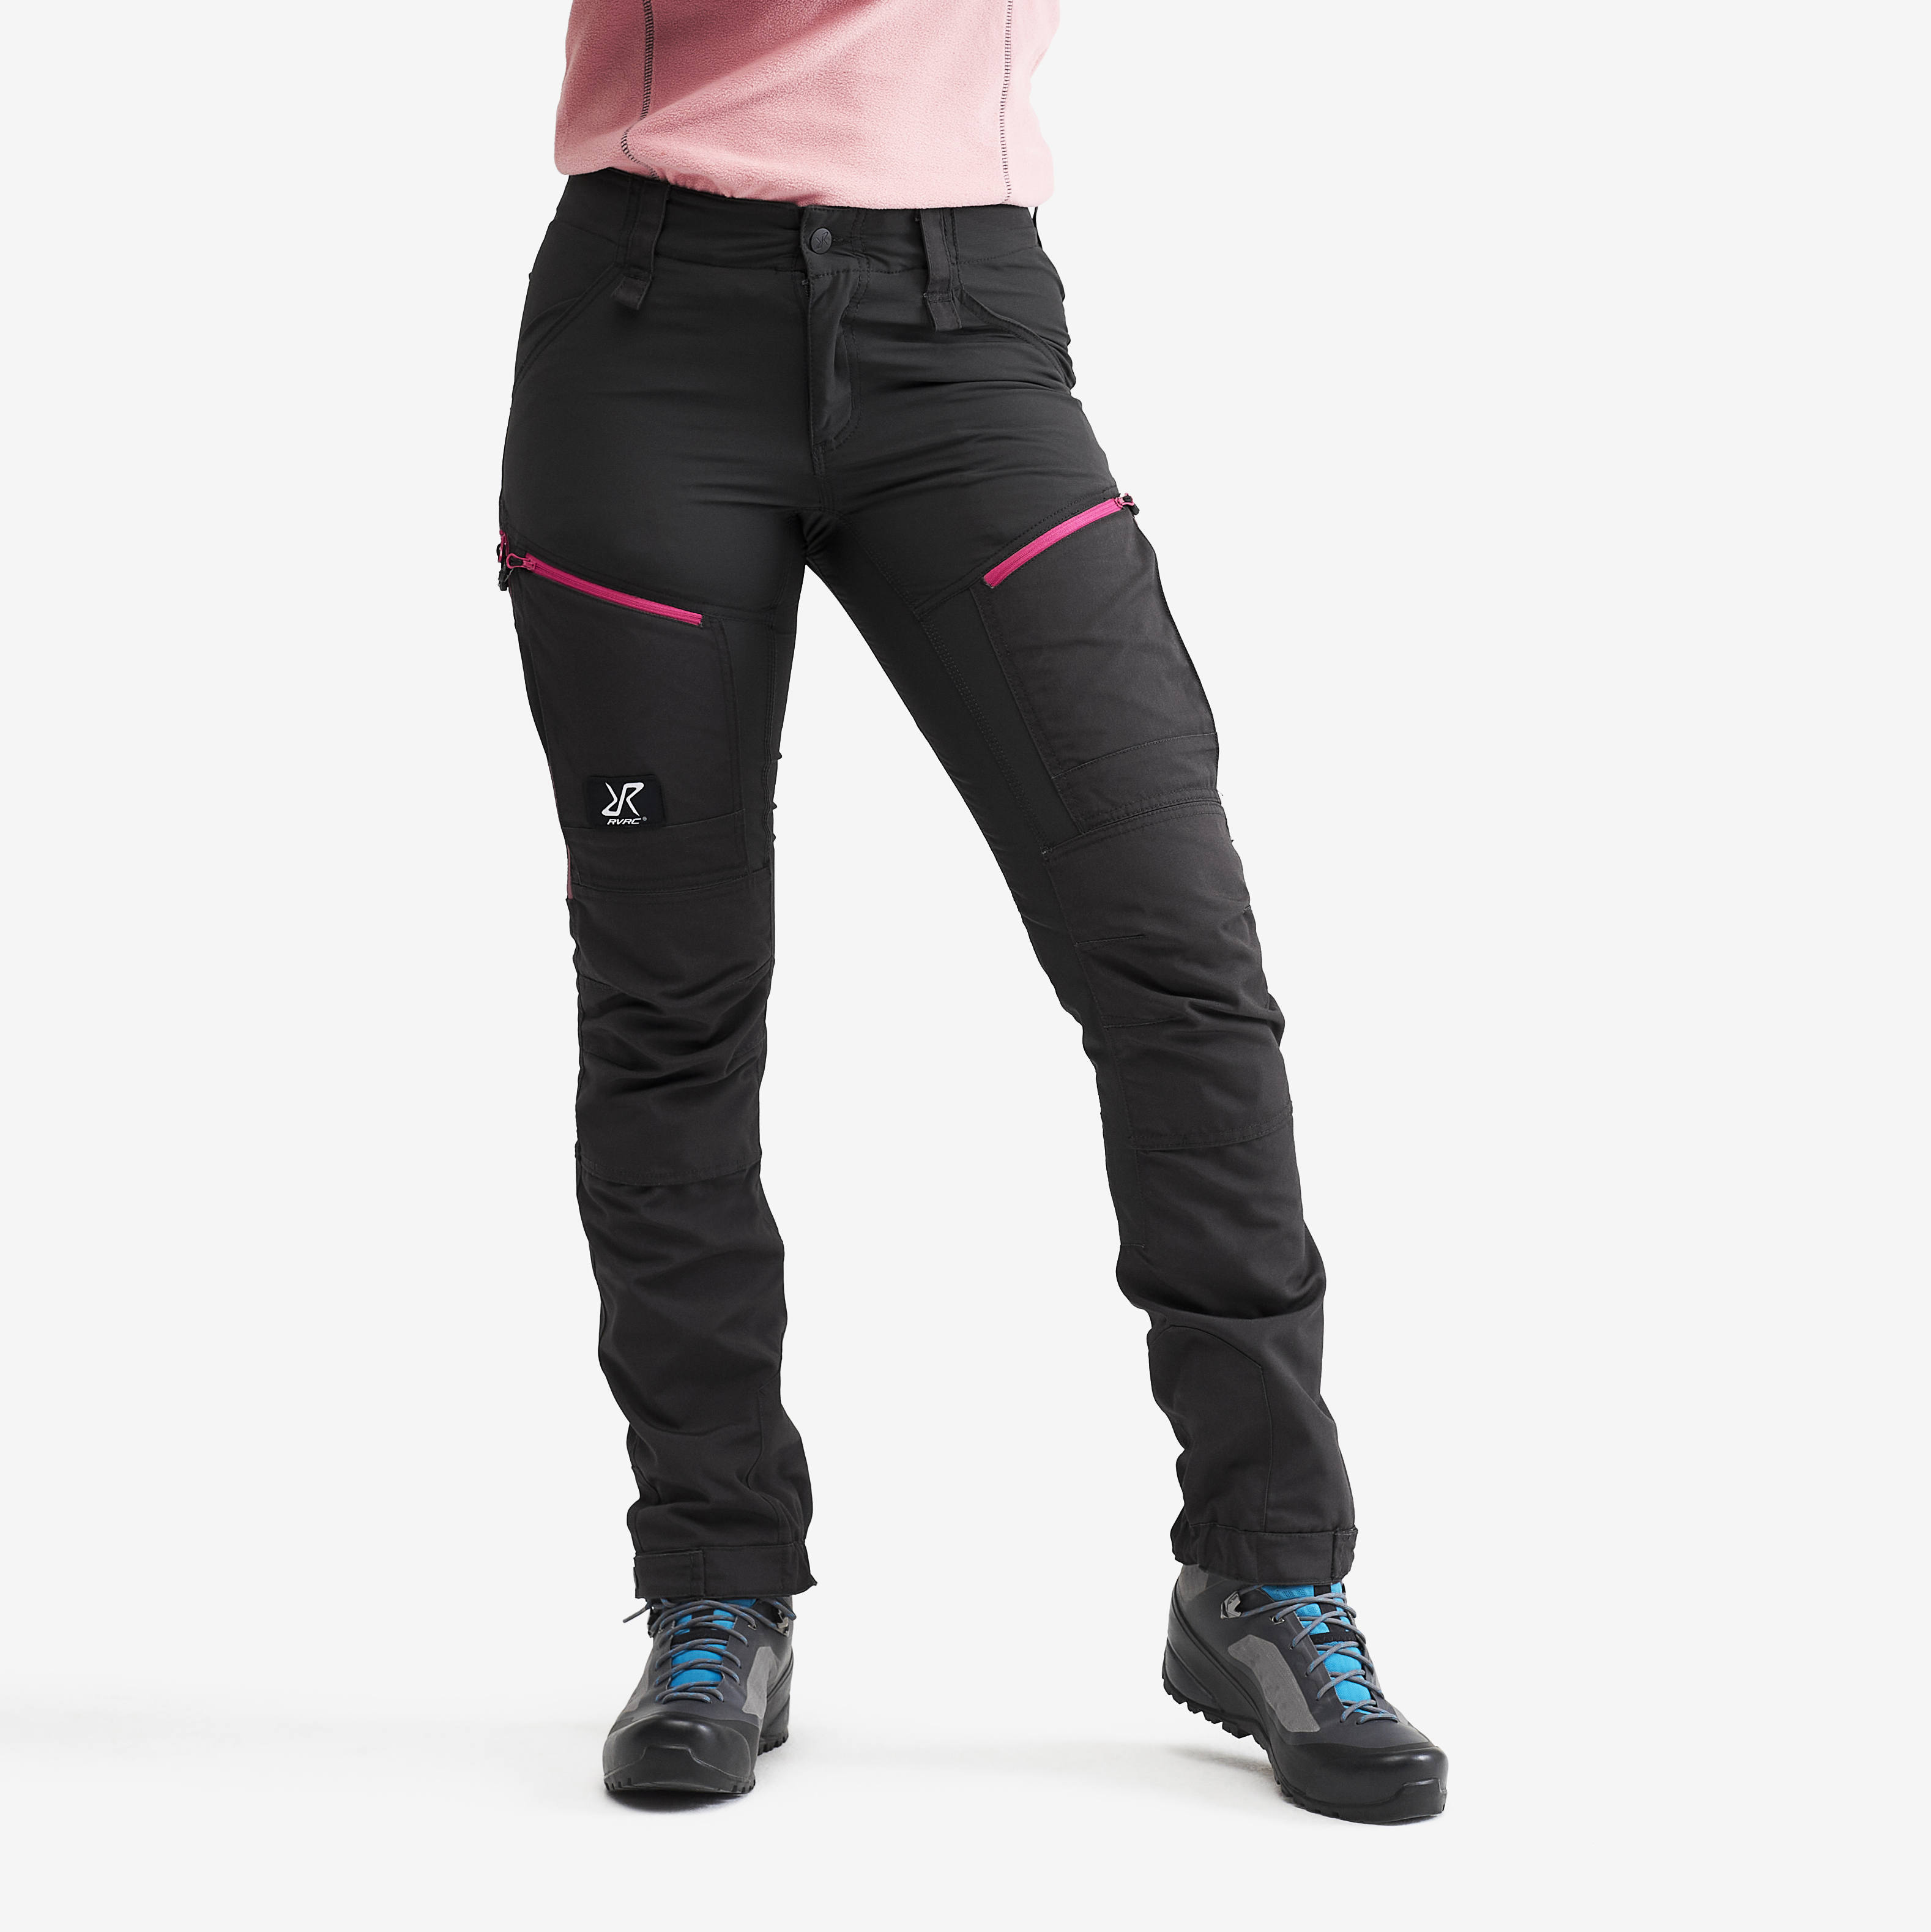 RVRC GP Pro Pants Grey/Pink Femme